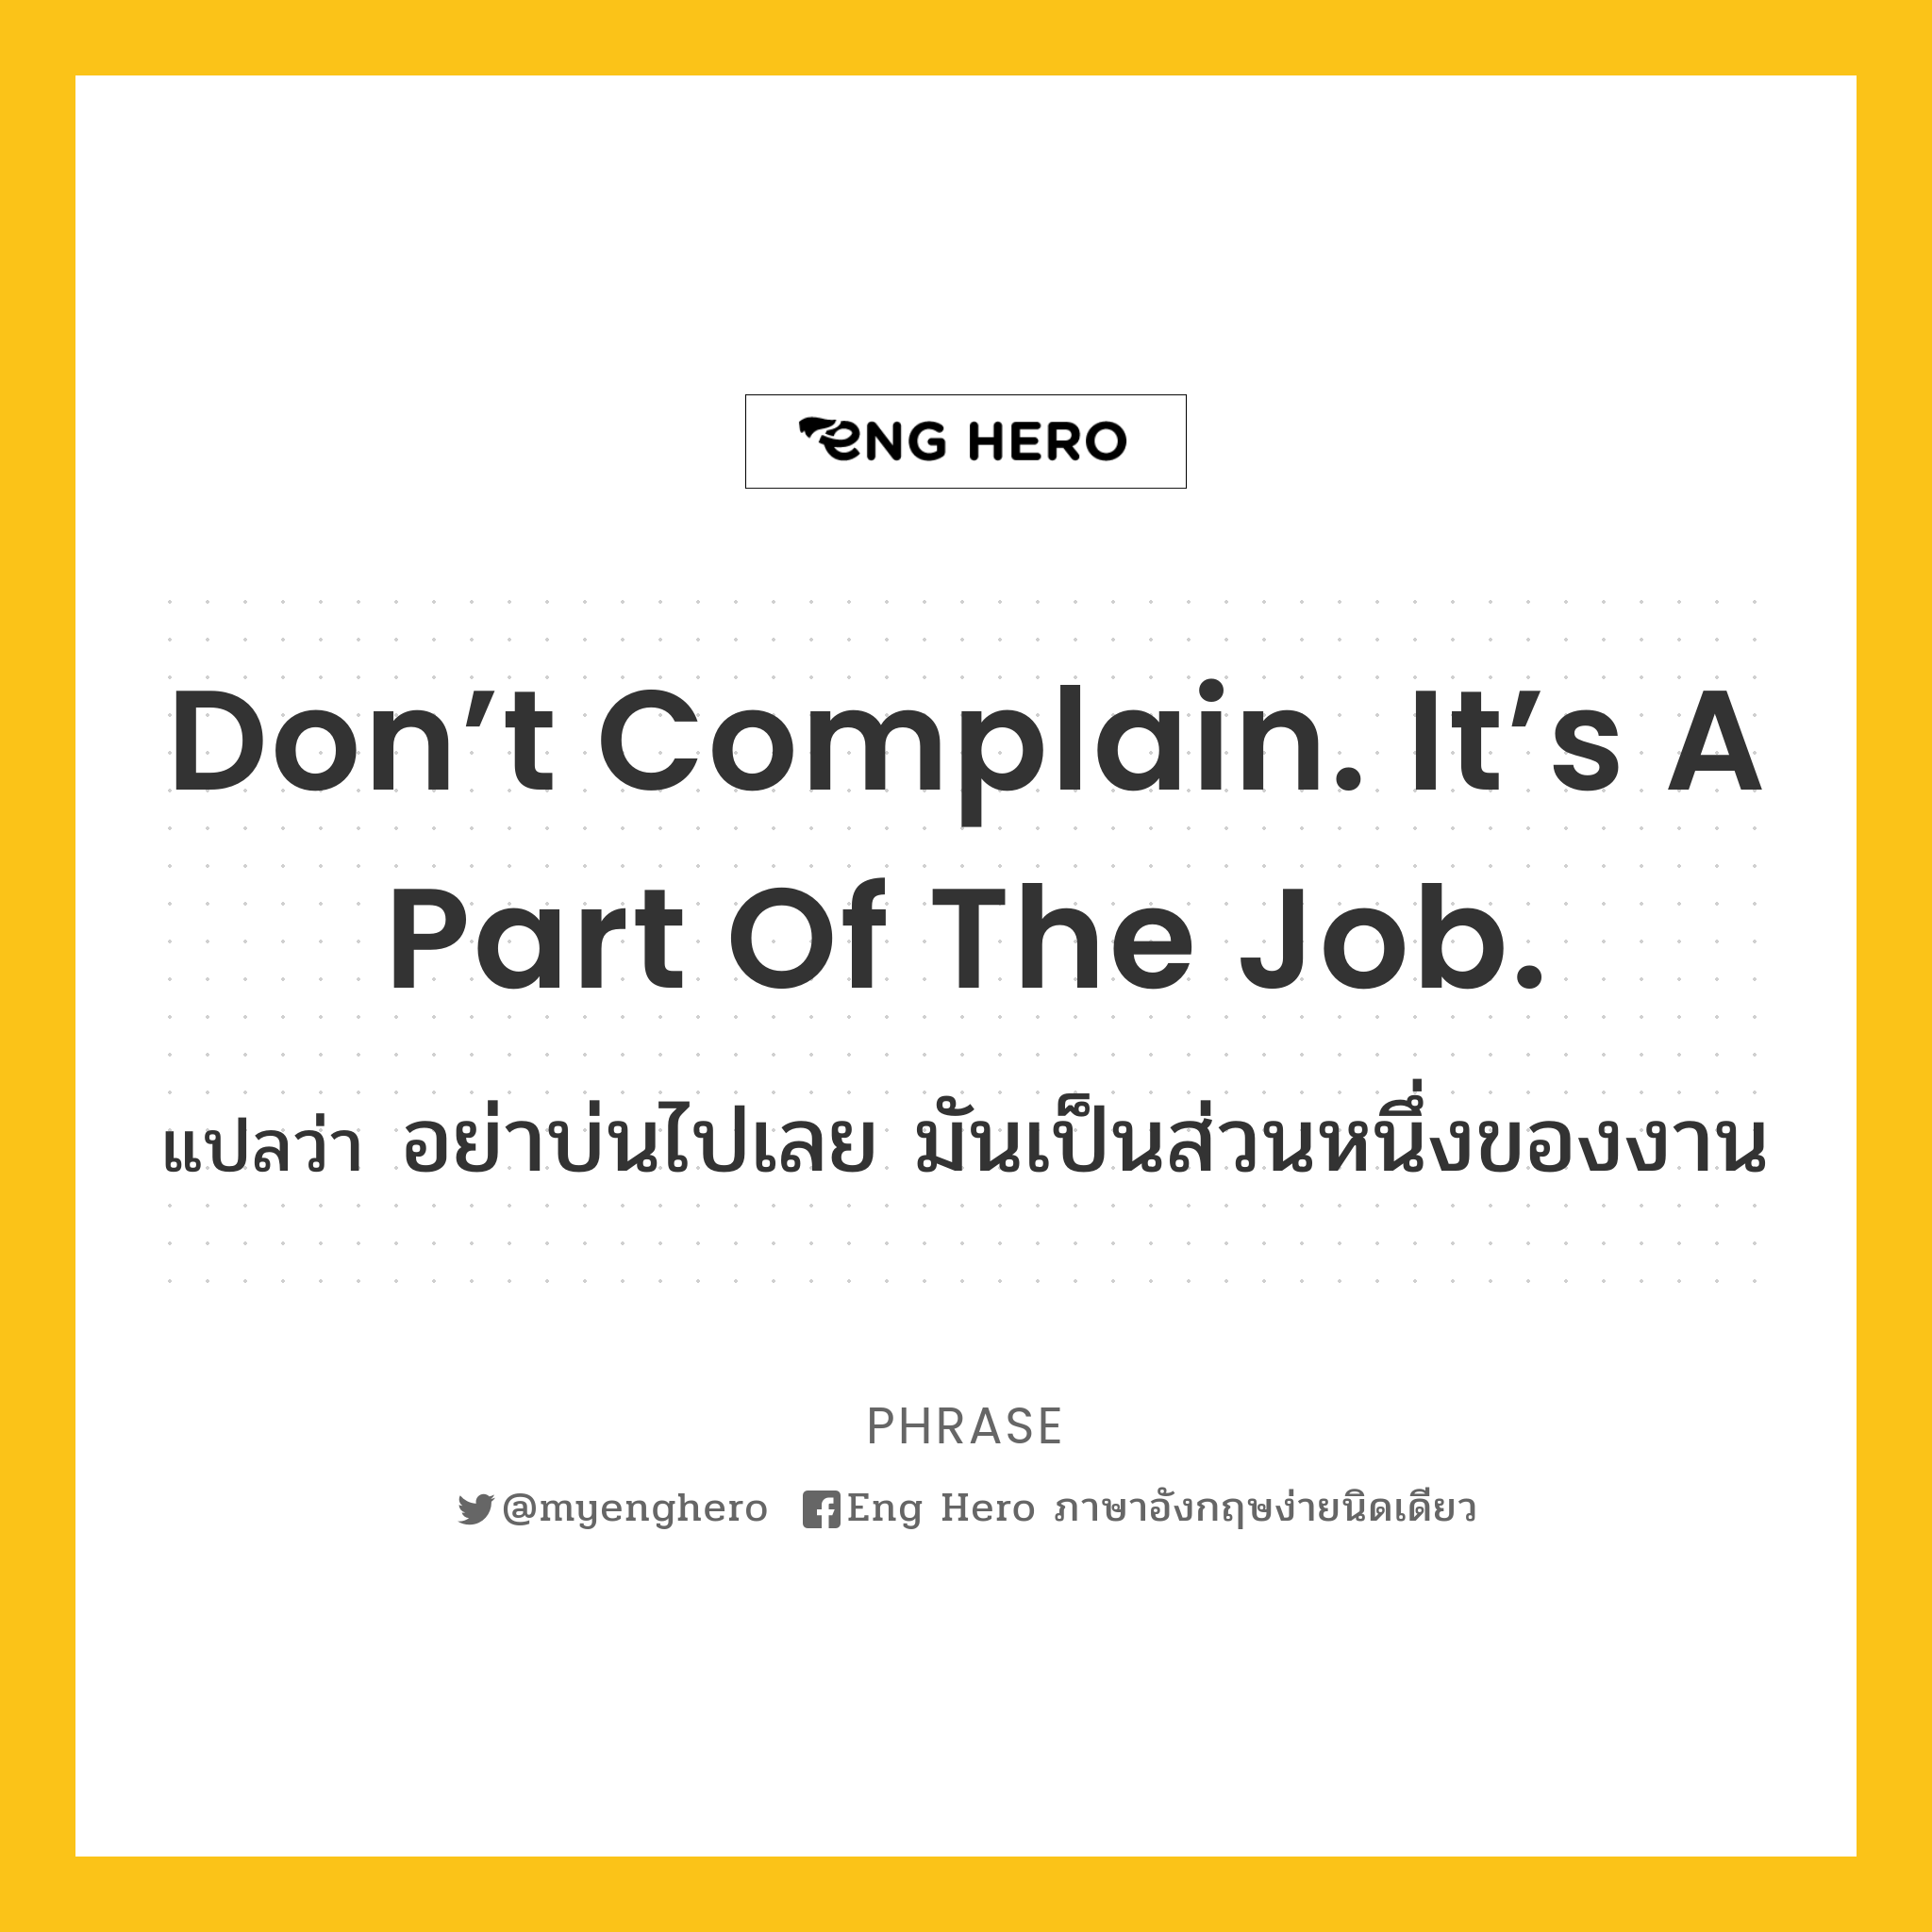 Don’t complain. It’s a part of the job.